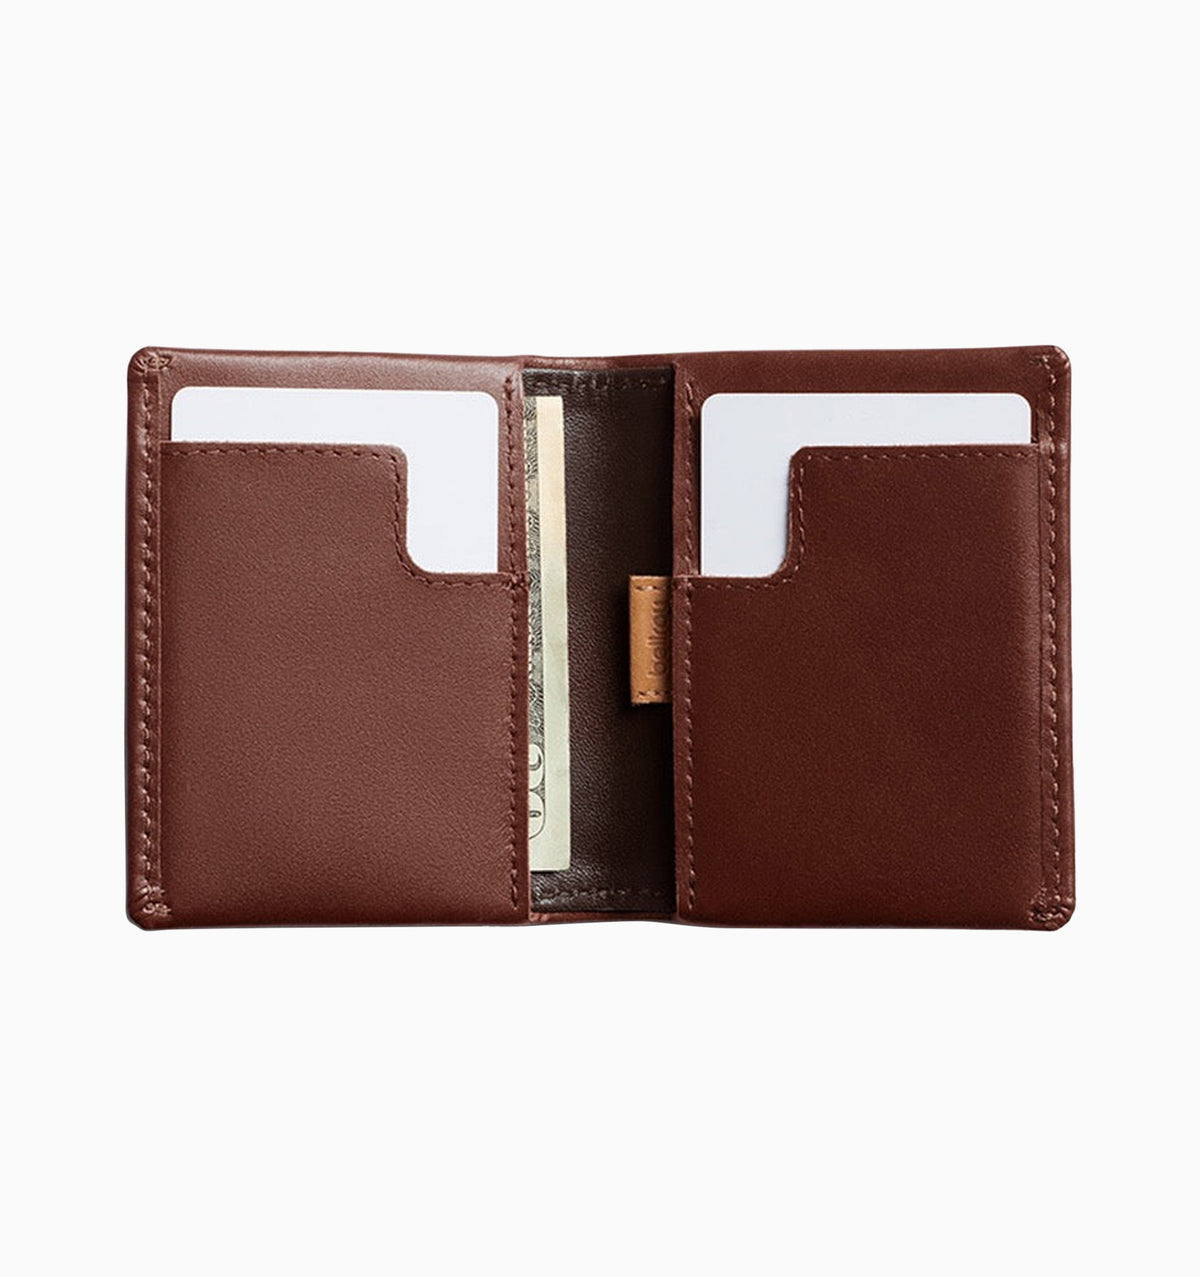 Bellroy Slim Sleeve Wallet - Cocoa